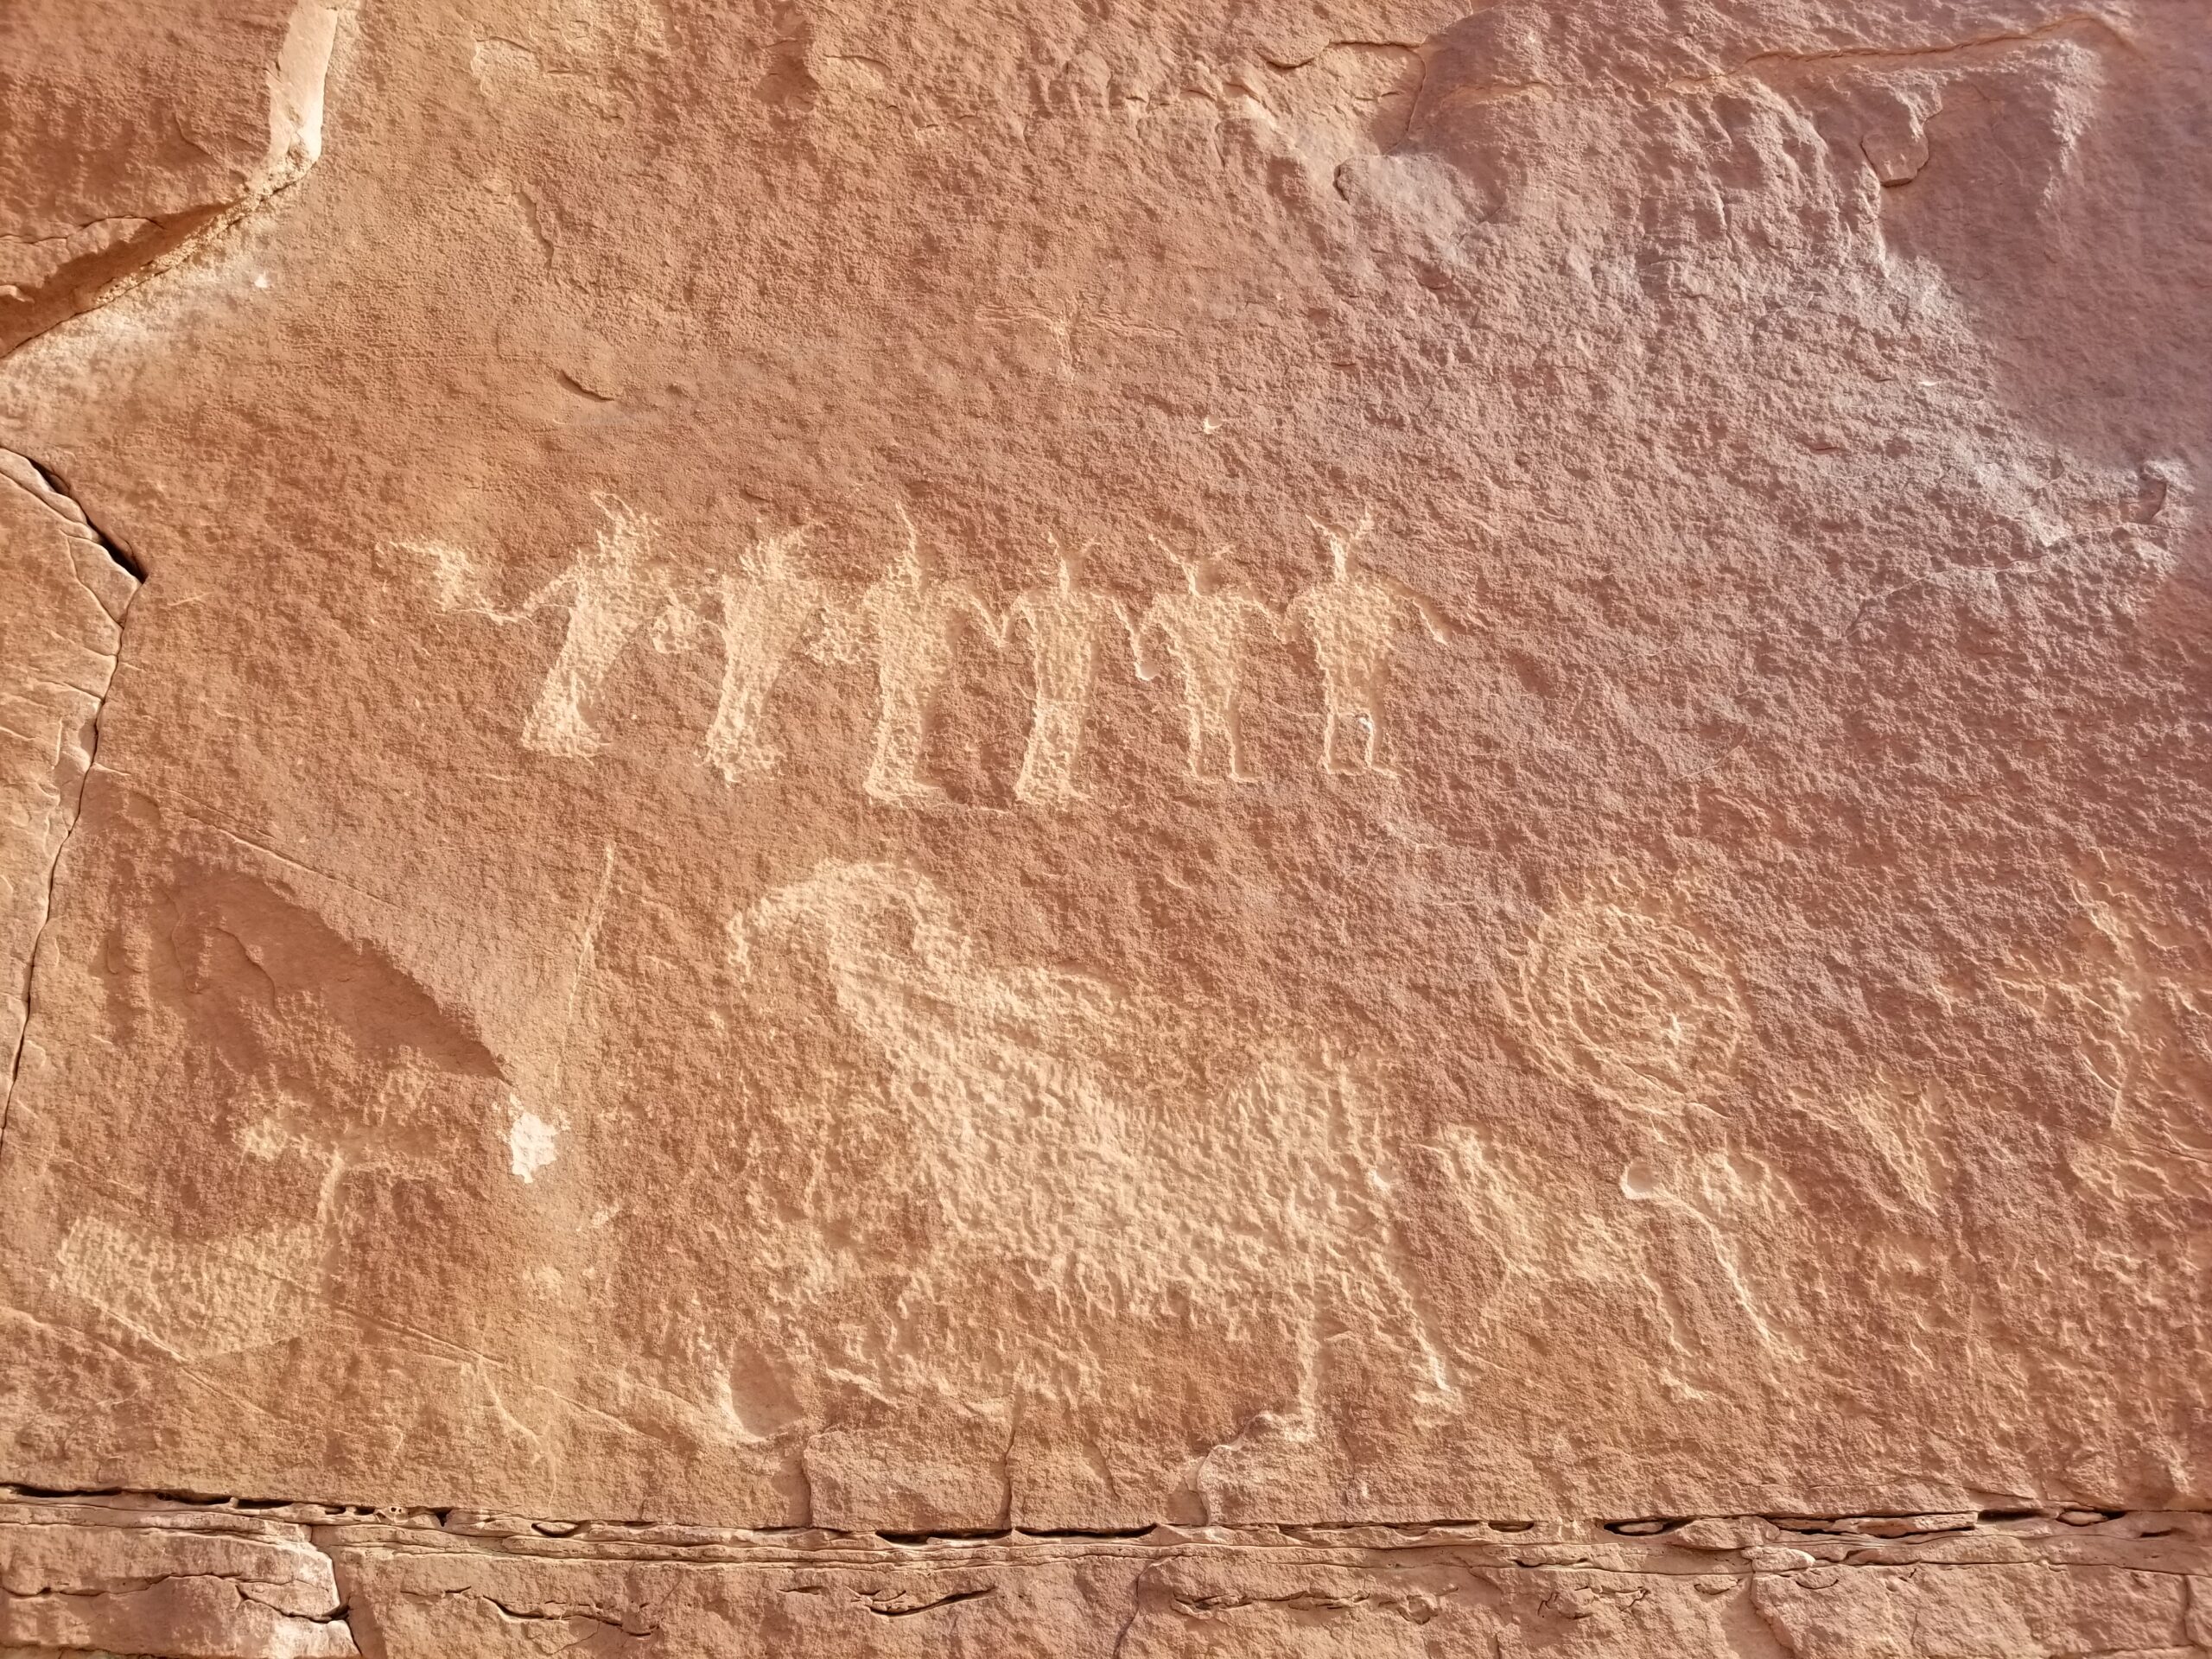 Petroglyph2